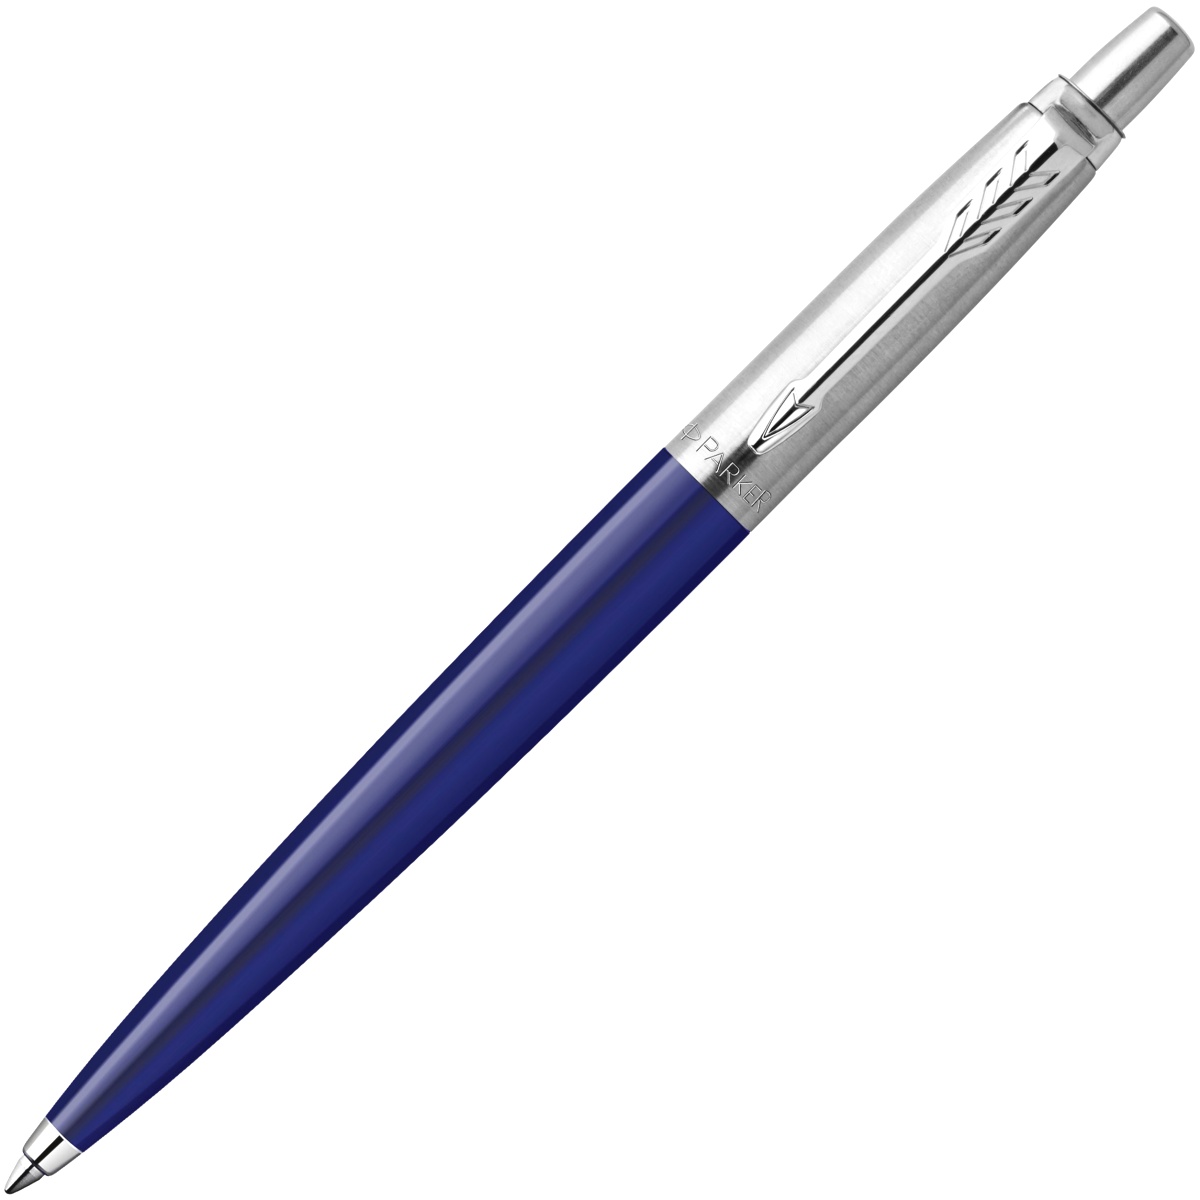  Шариковая ручка Parker Jotter K60 Originals Color Plastic 2019, Navy Blue СT, фото 2